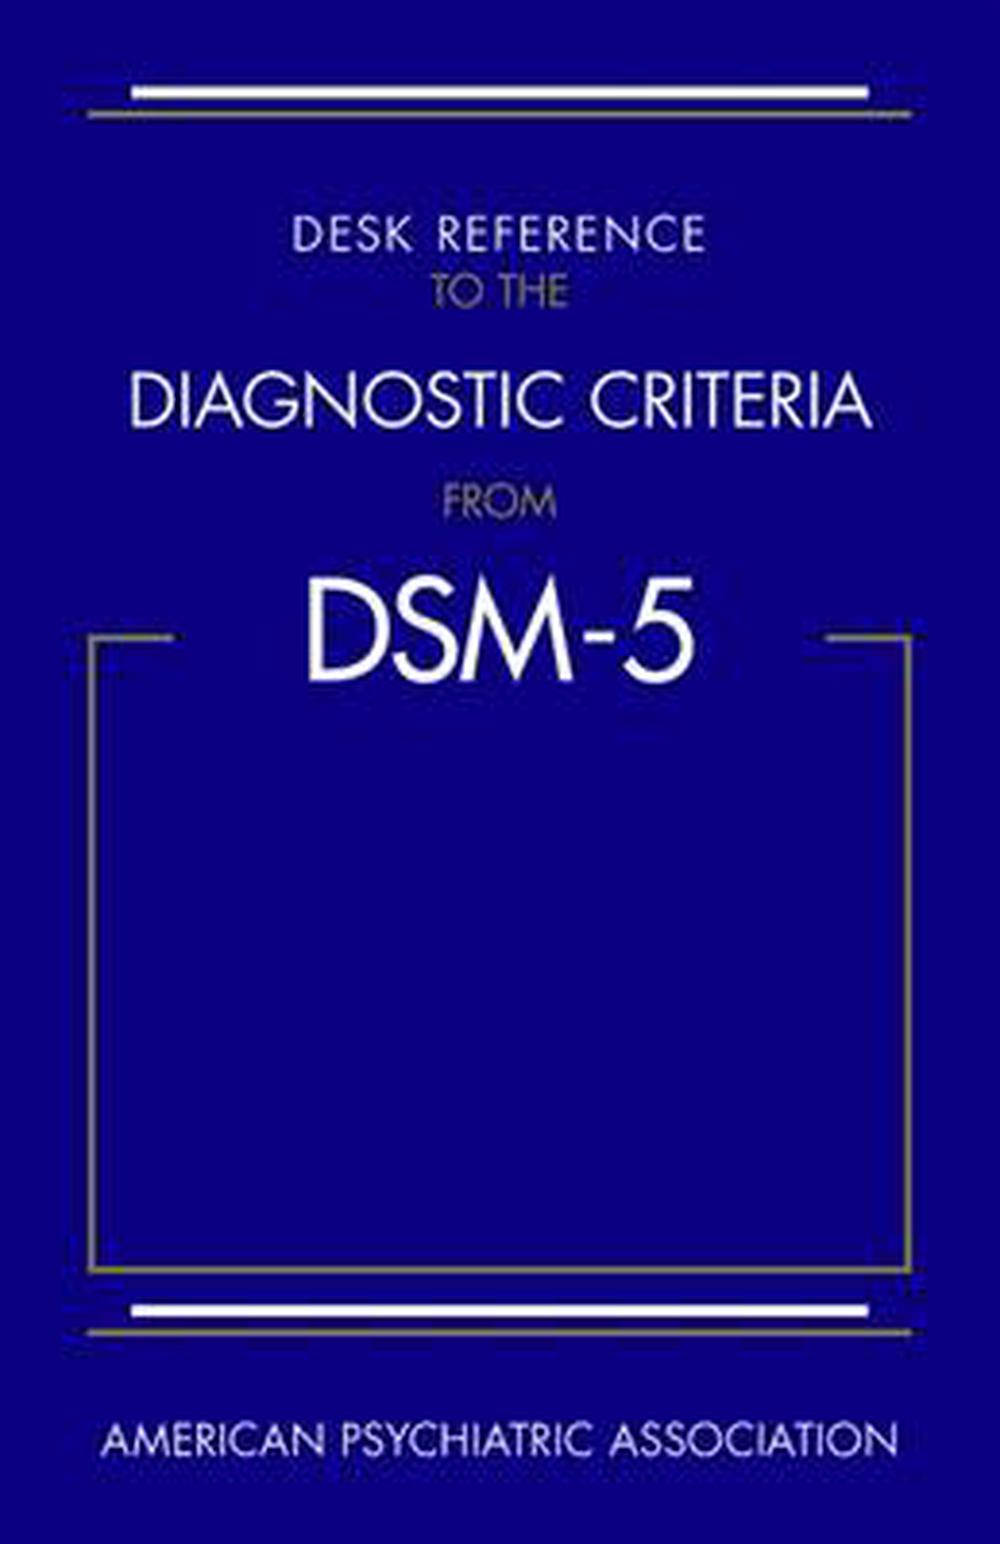 dsm 5 diagnostic criteria asd